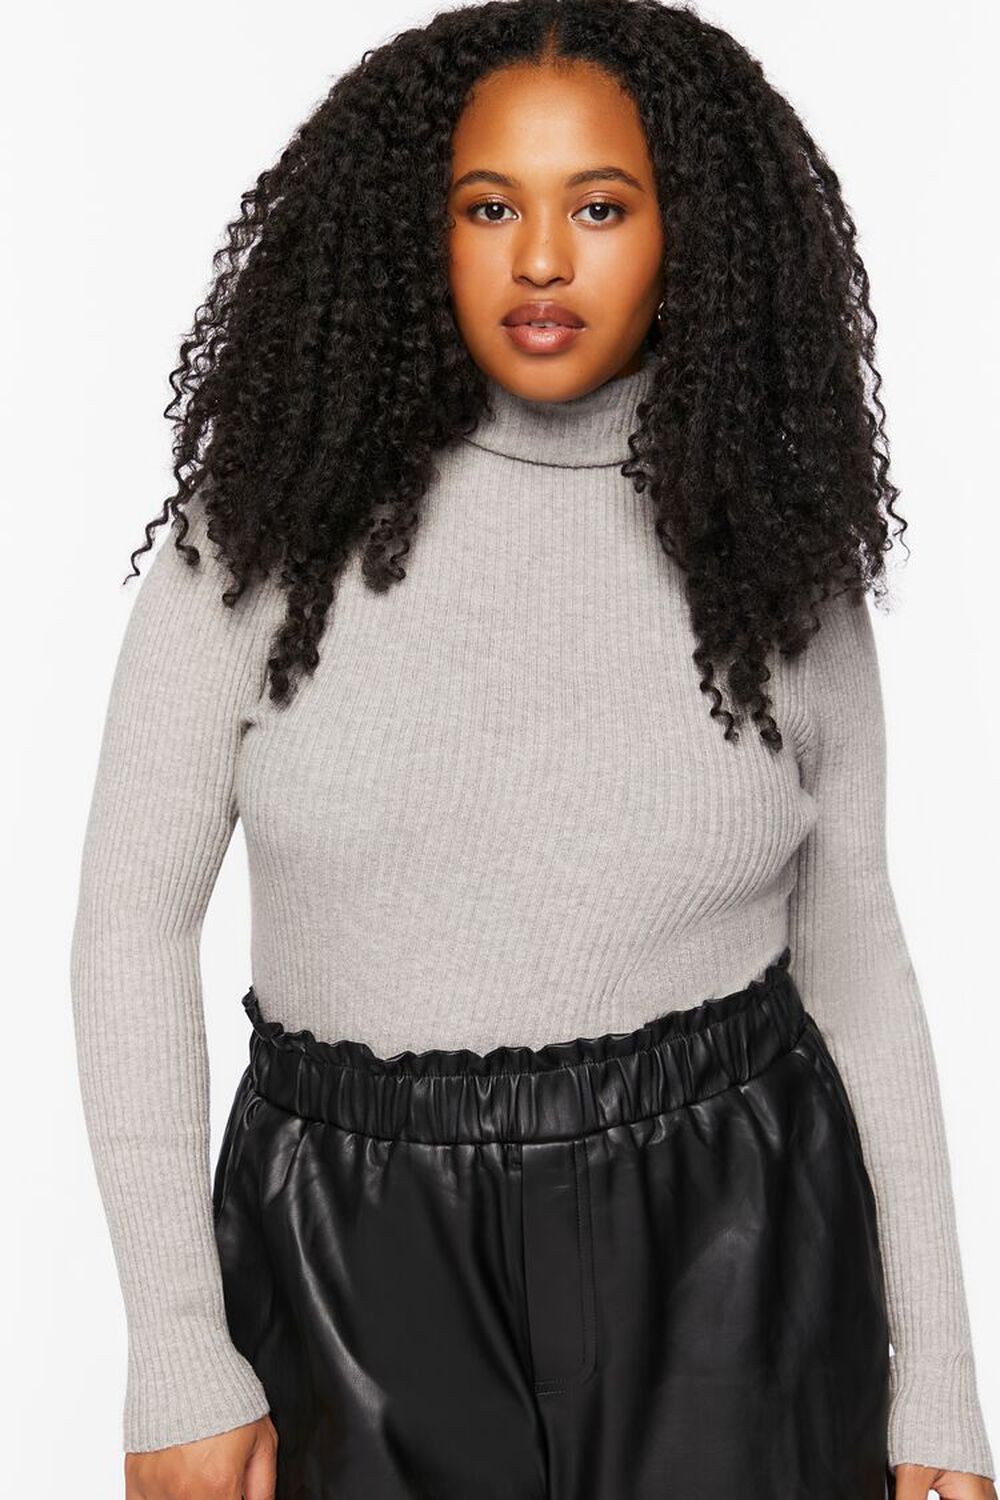 HEATHER GREY Plus Size Sweater-Knit Turtleneck Top, image 1